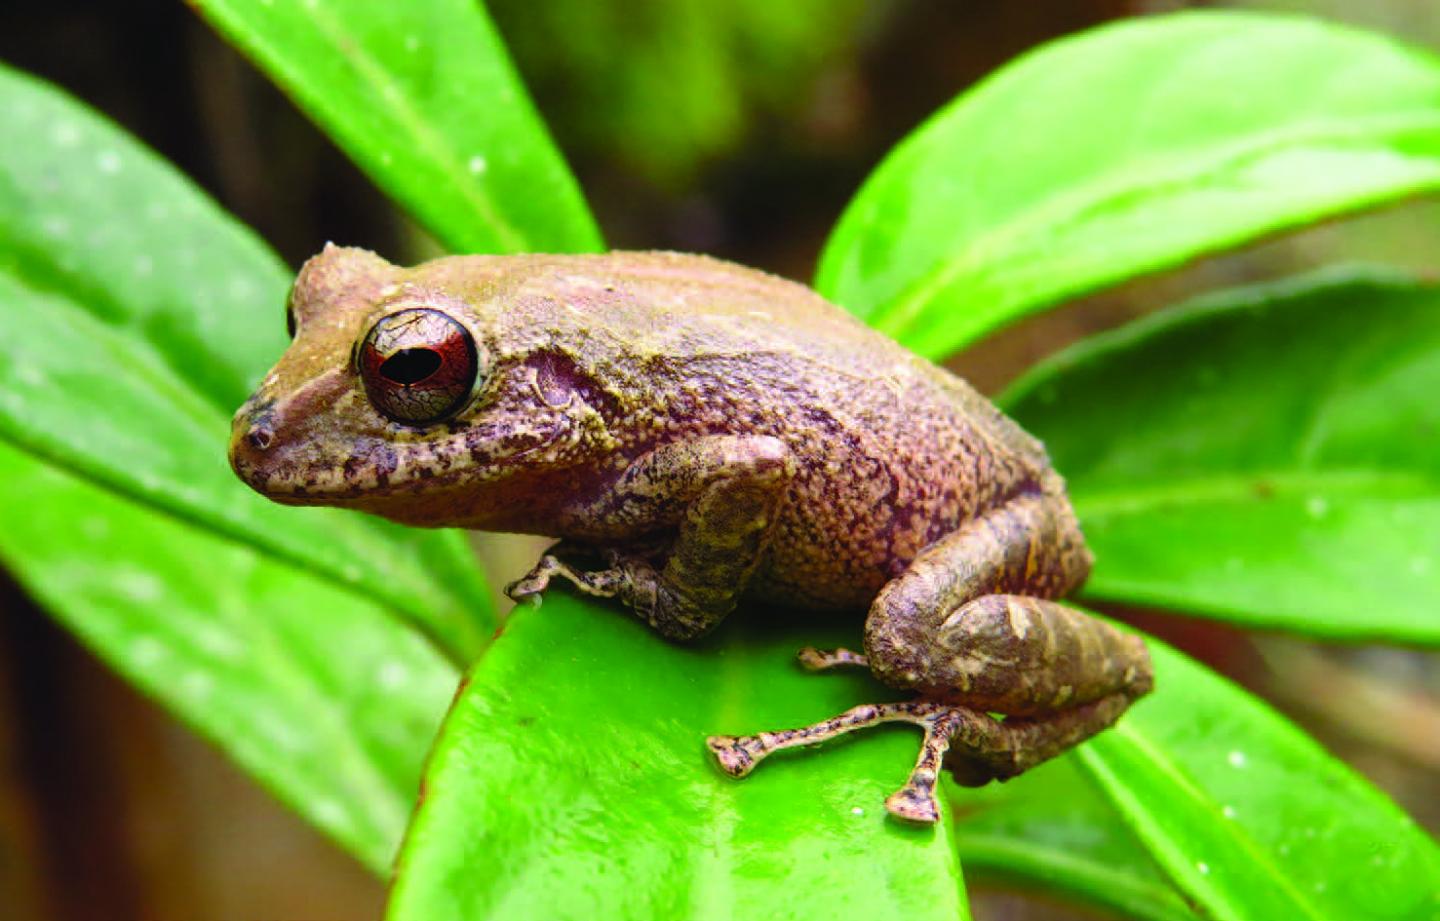 Adult Prometeo Rain Frog